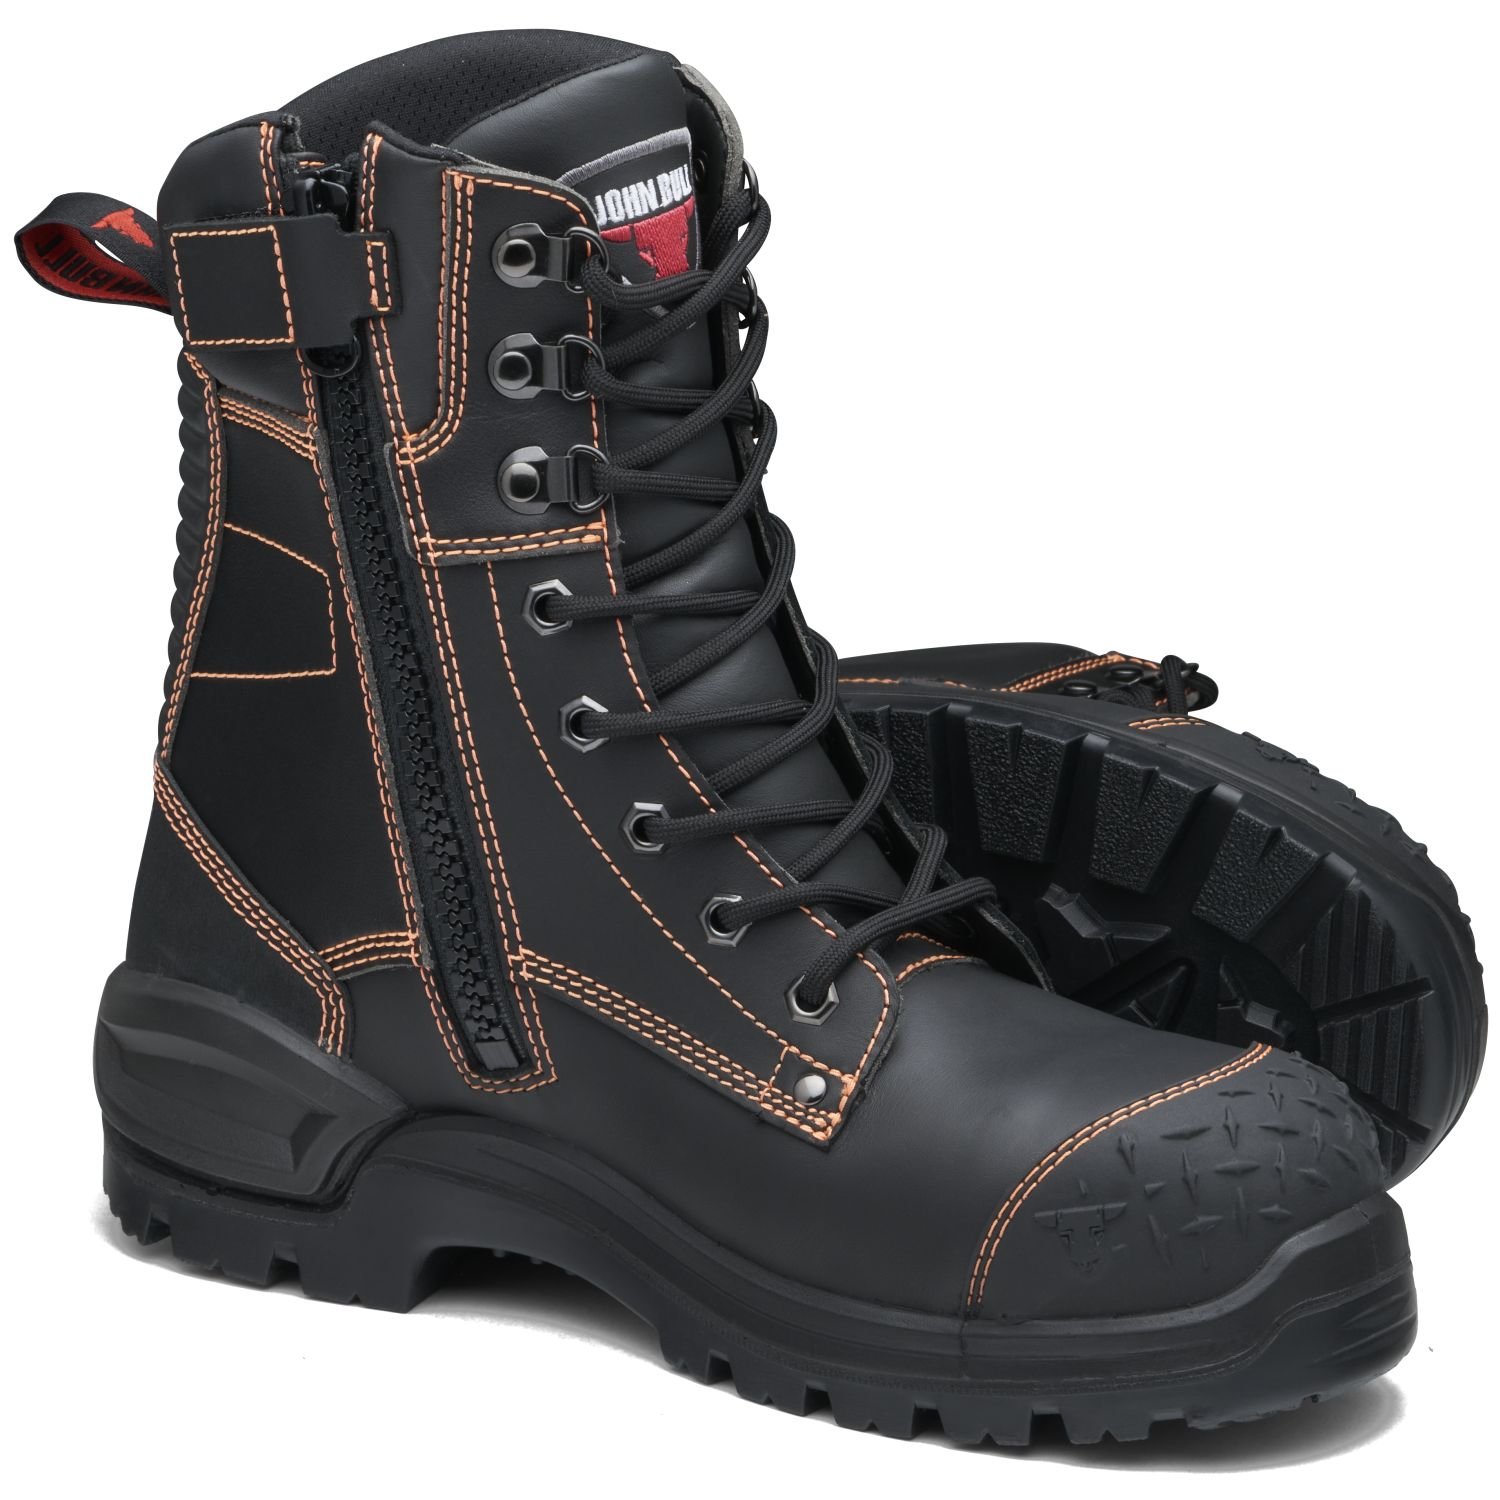 John Bull Kokoda 3.0 Lace Up Hi Leg Safety Boot With Toe Guard